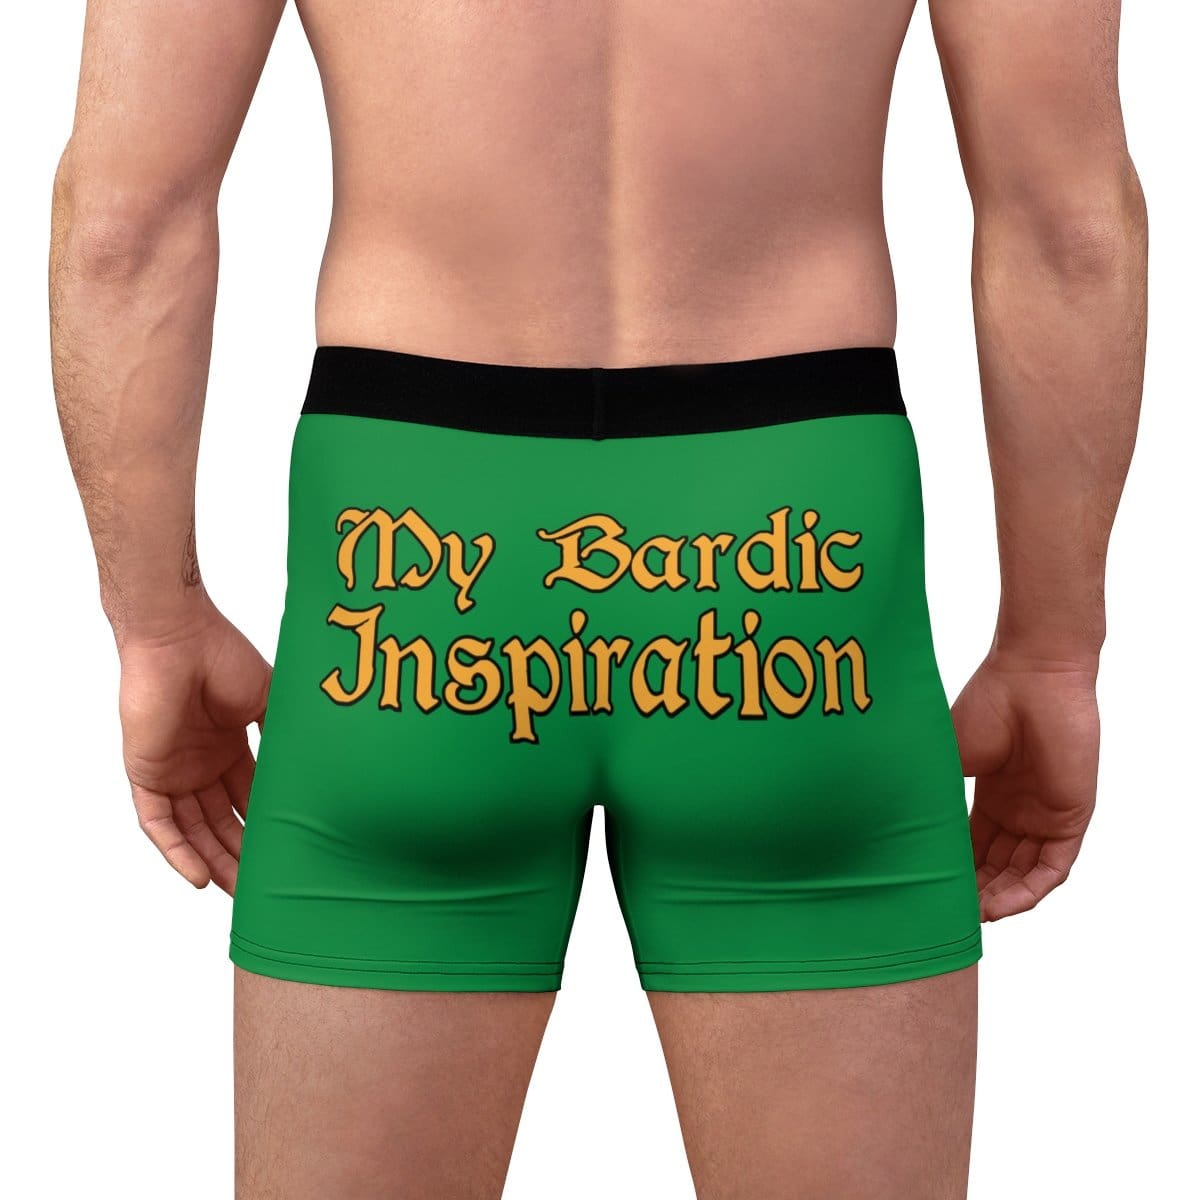 Underwear Suggestion: Clever - Gajo Latin Boxer Briefs - Green